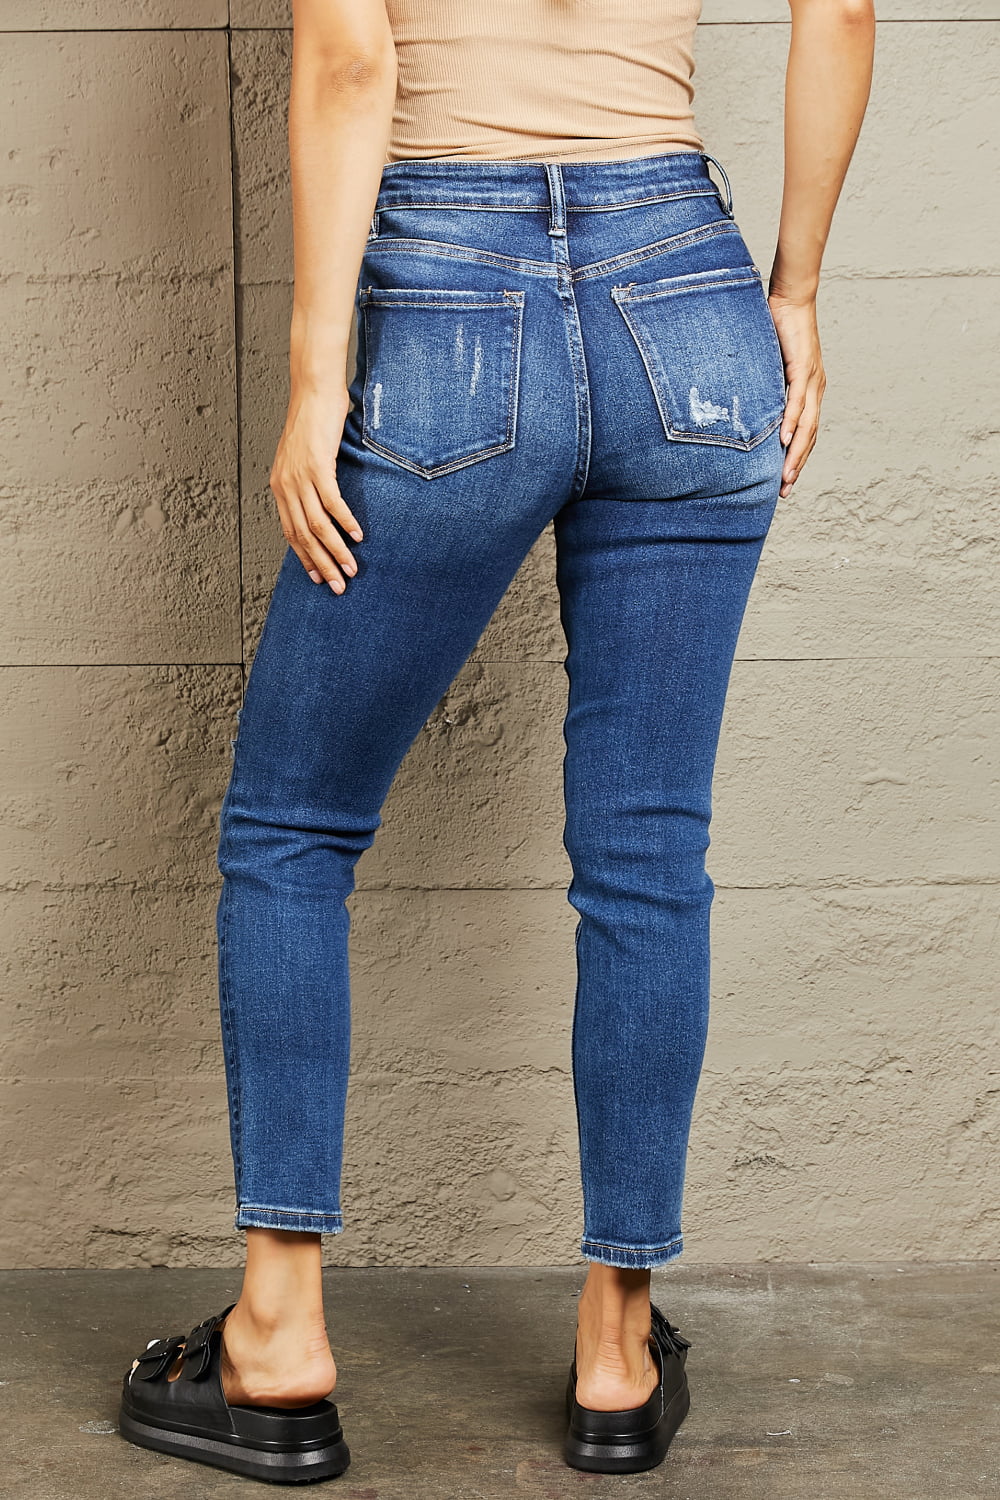 BAYEAS Mid Rise Distressed Slim Jeans - Alonna's Legging Land